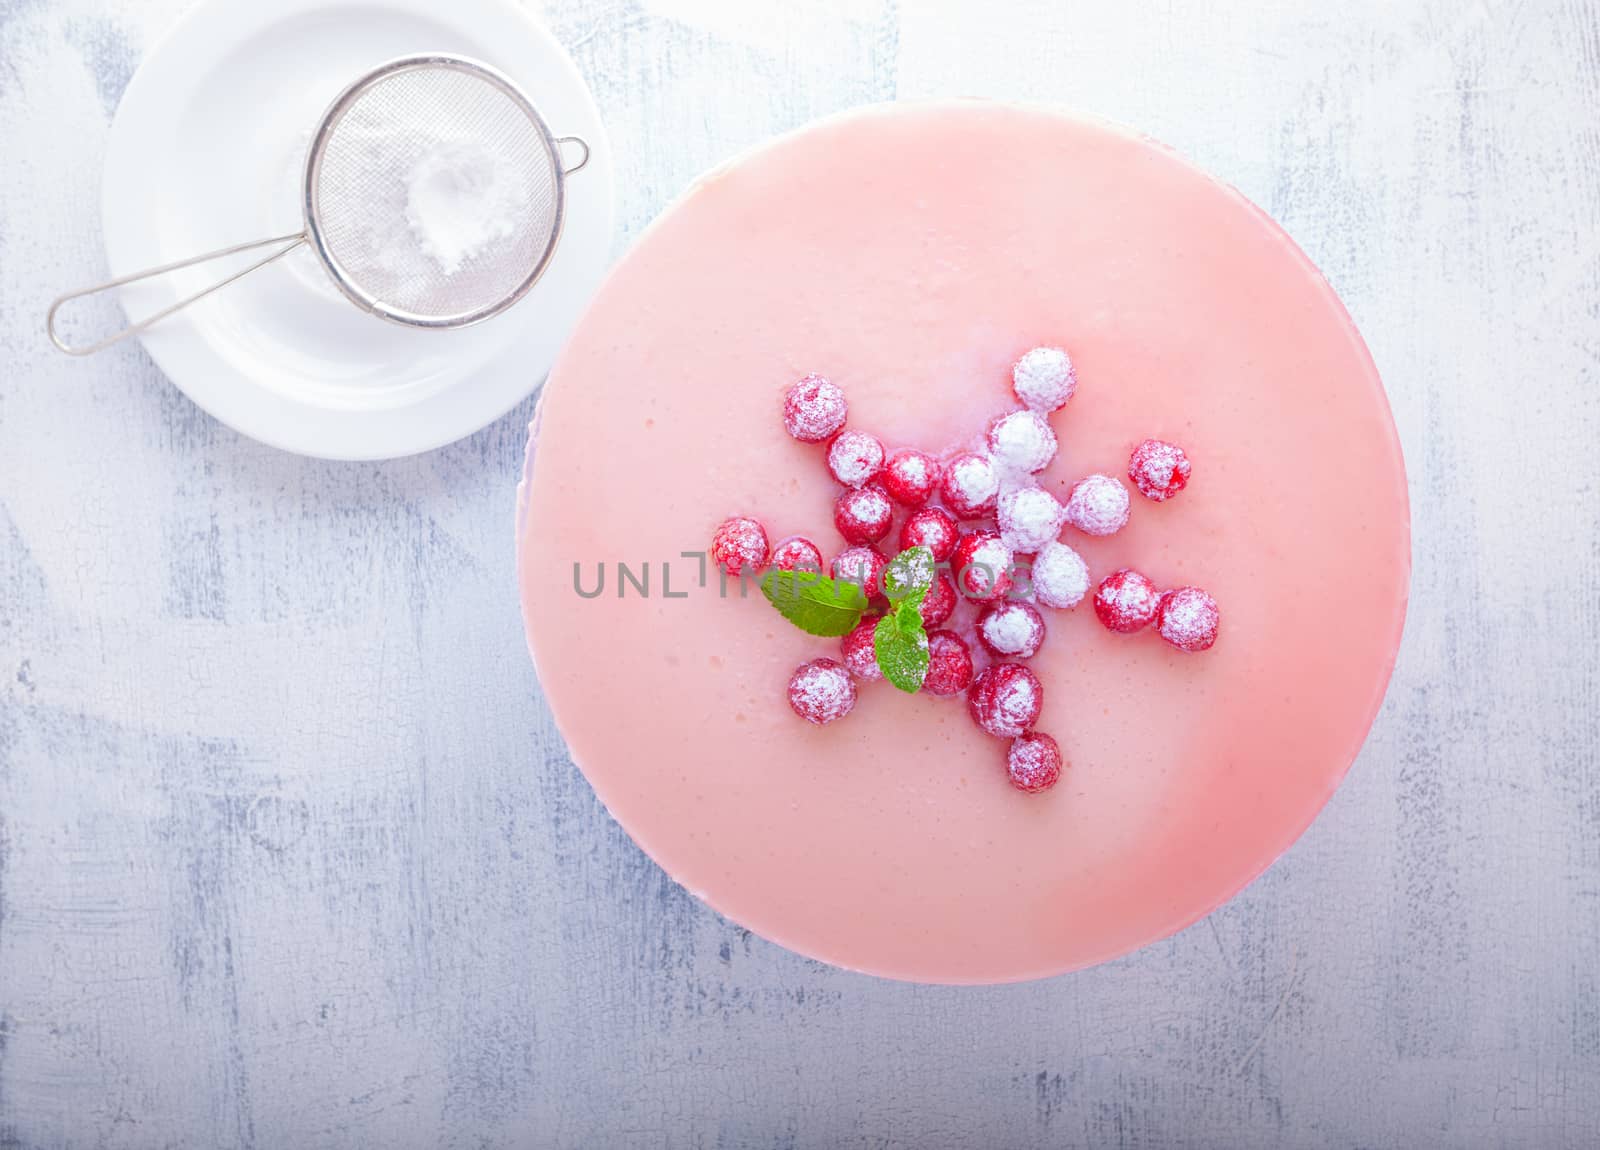 Raspberry yogurt cake with berries on a table